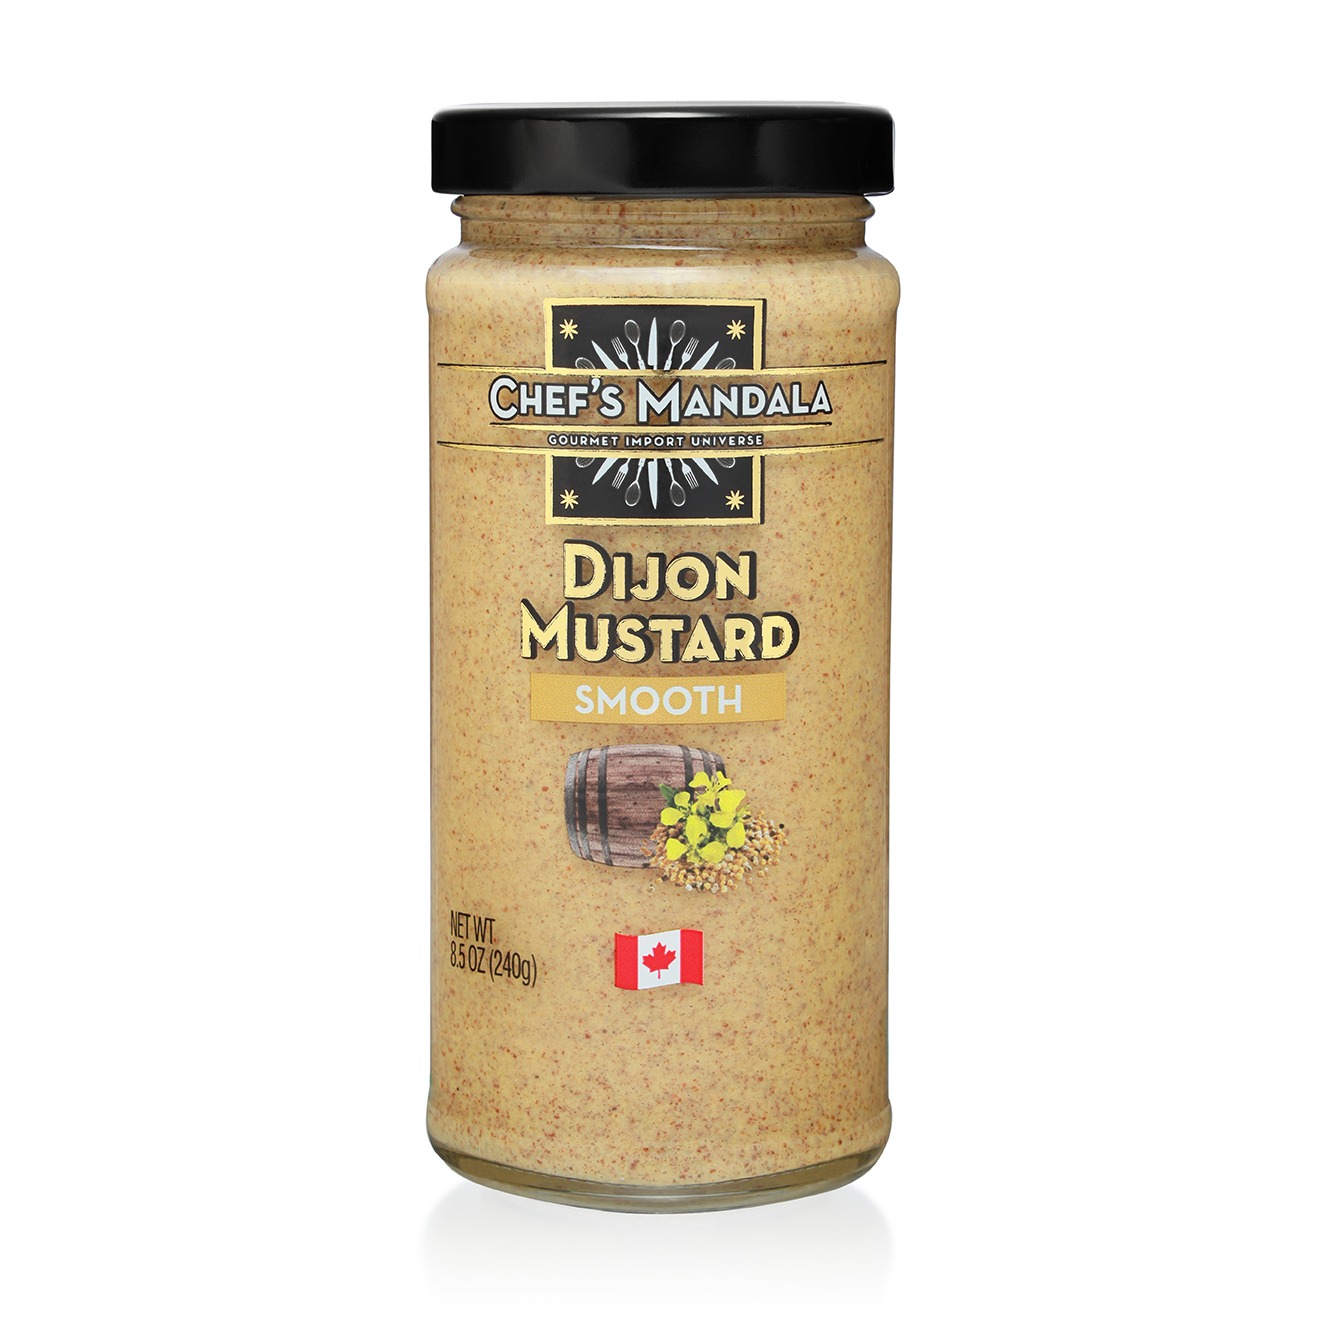 Image result for chef mandala smooth dijon mustard